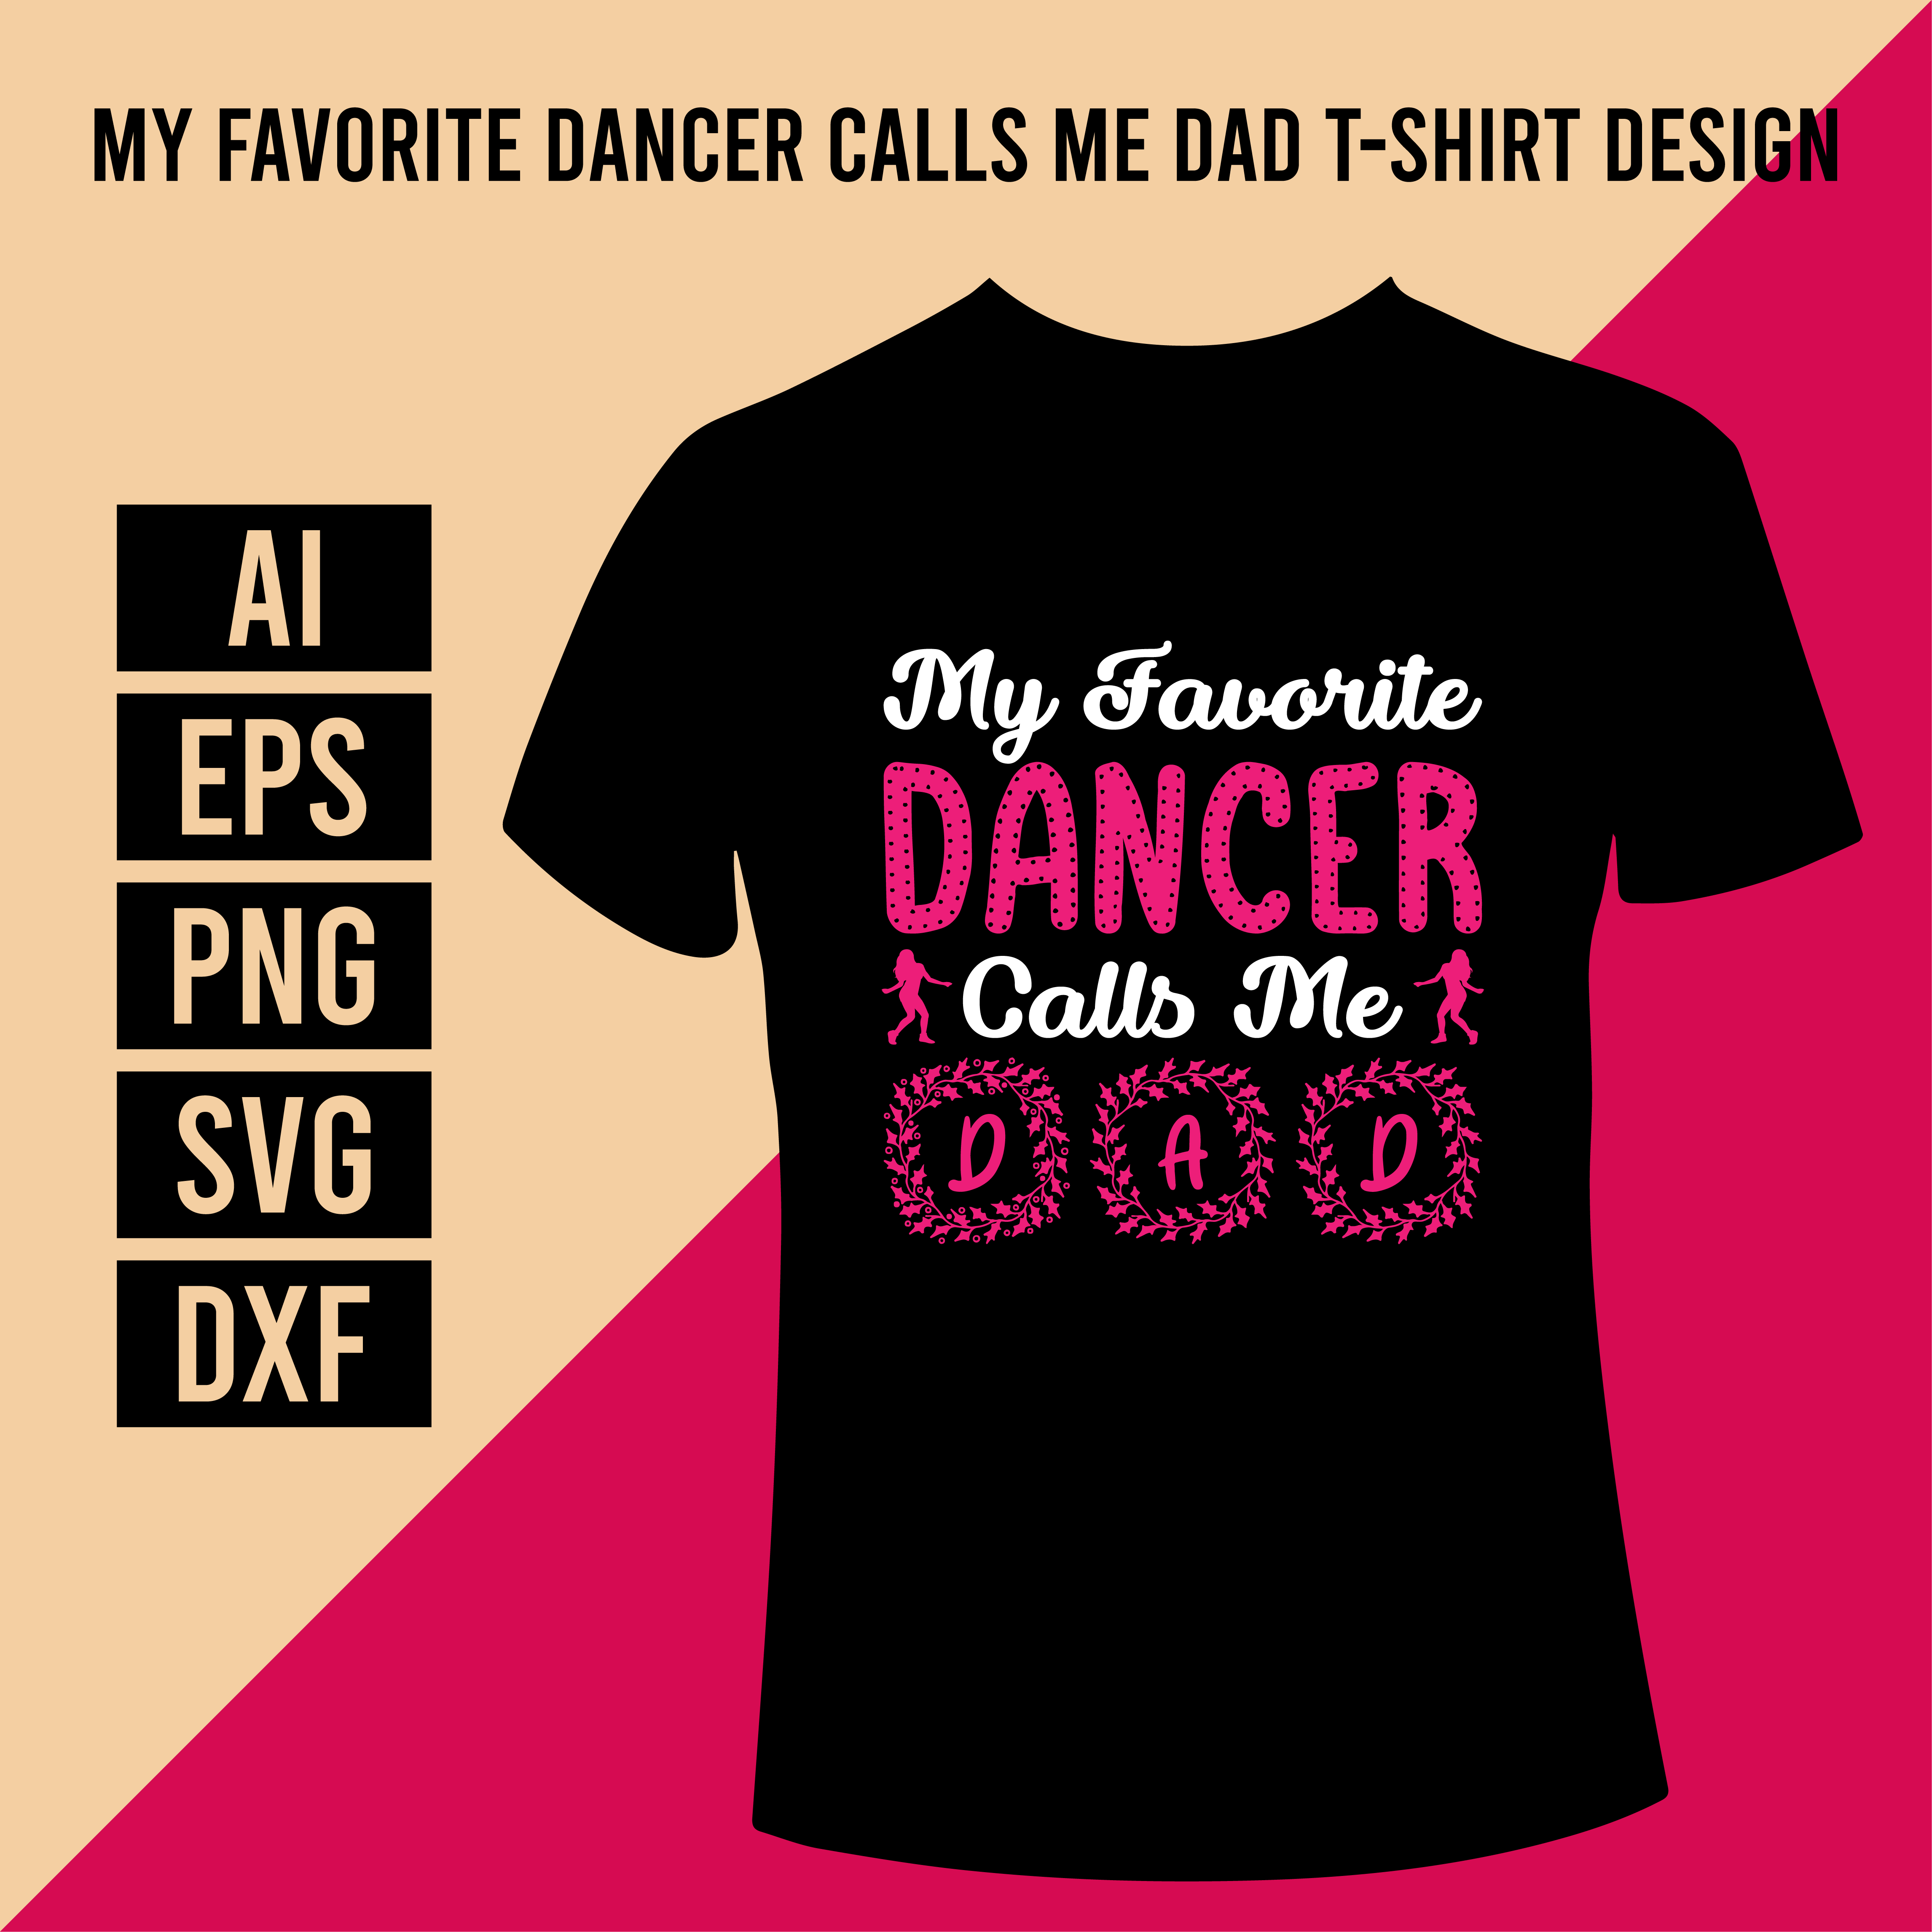 My Favorite Dancer Calls Me Dad T-Shirt Design cover image.